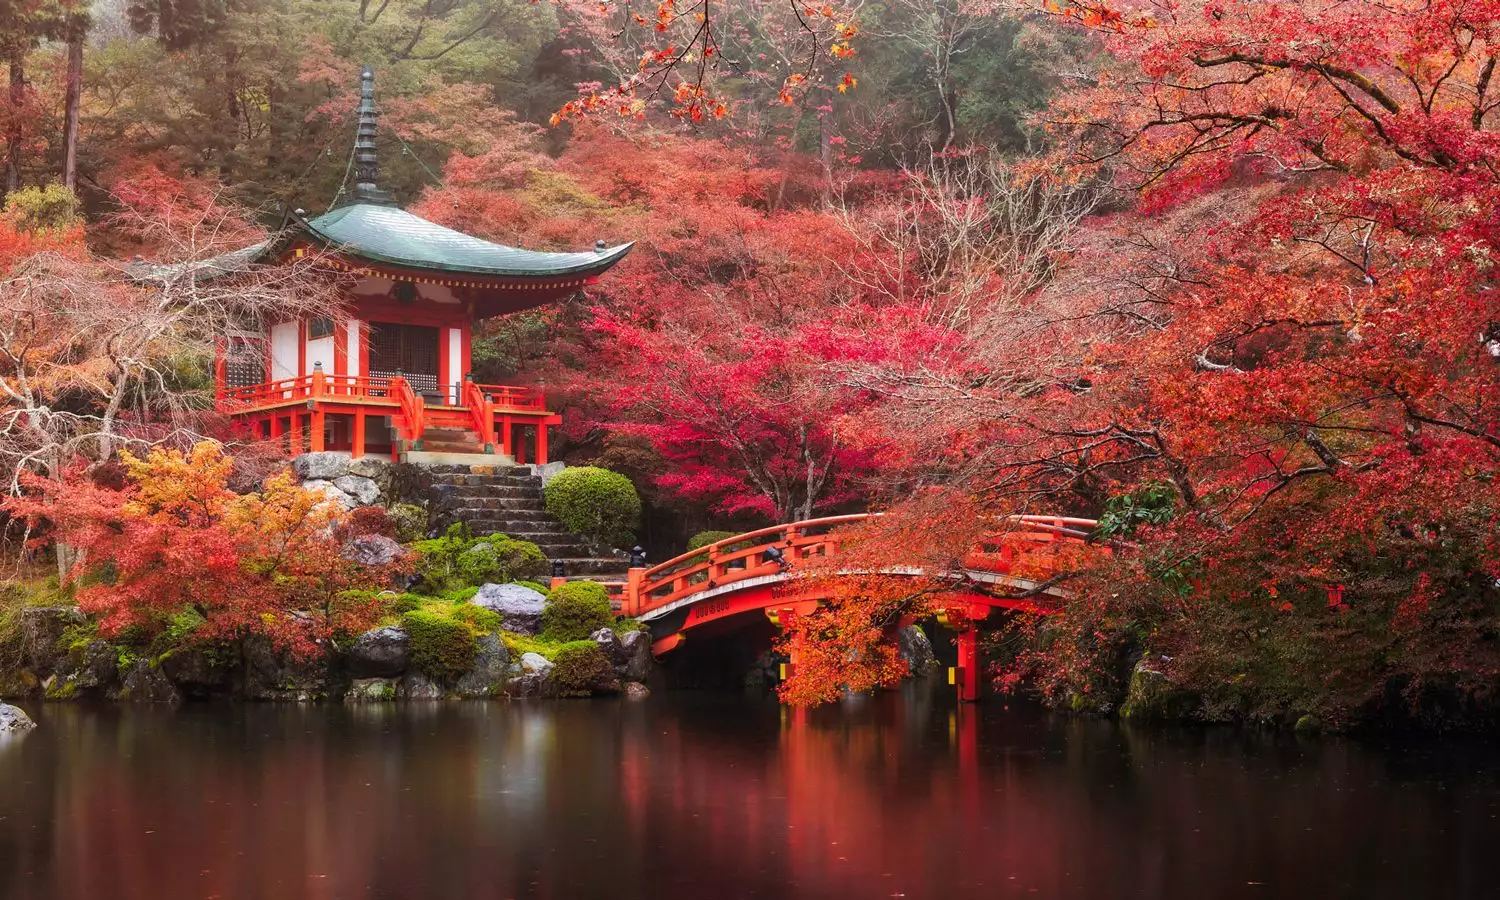 Kyoto Temple, Autumn in Japan